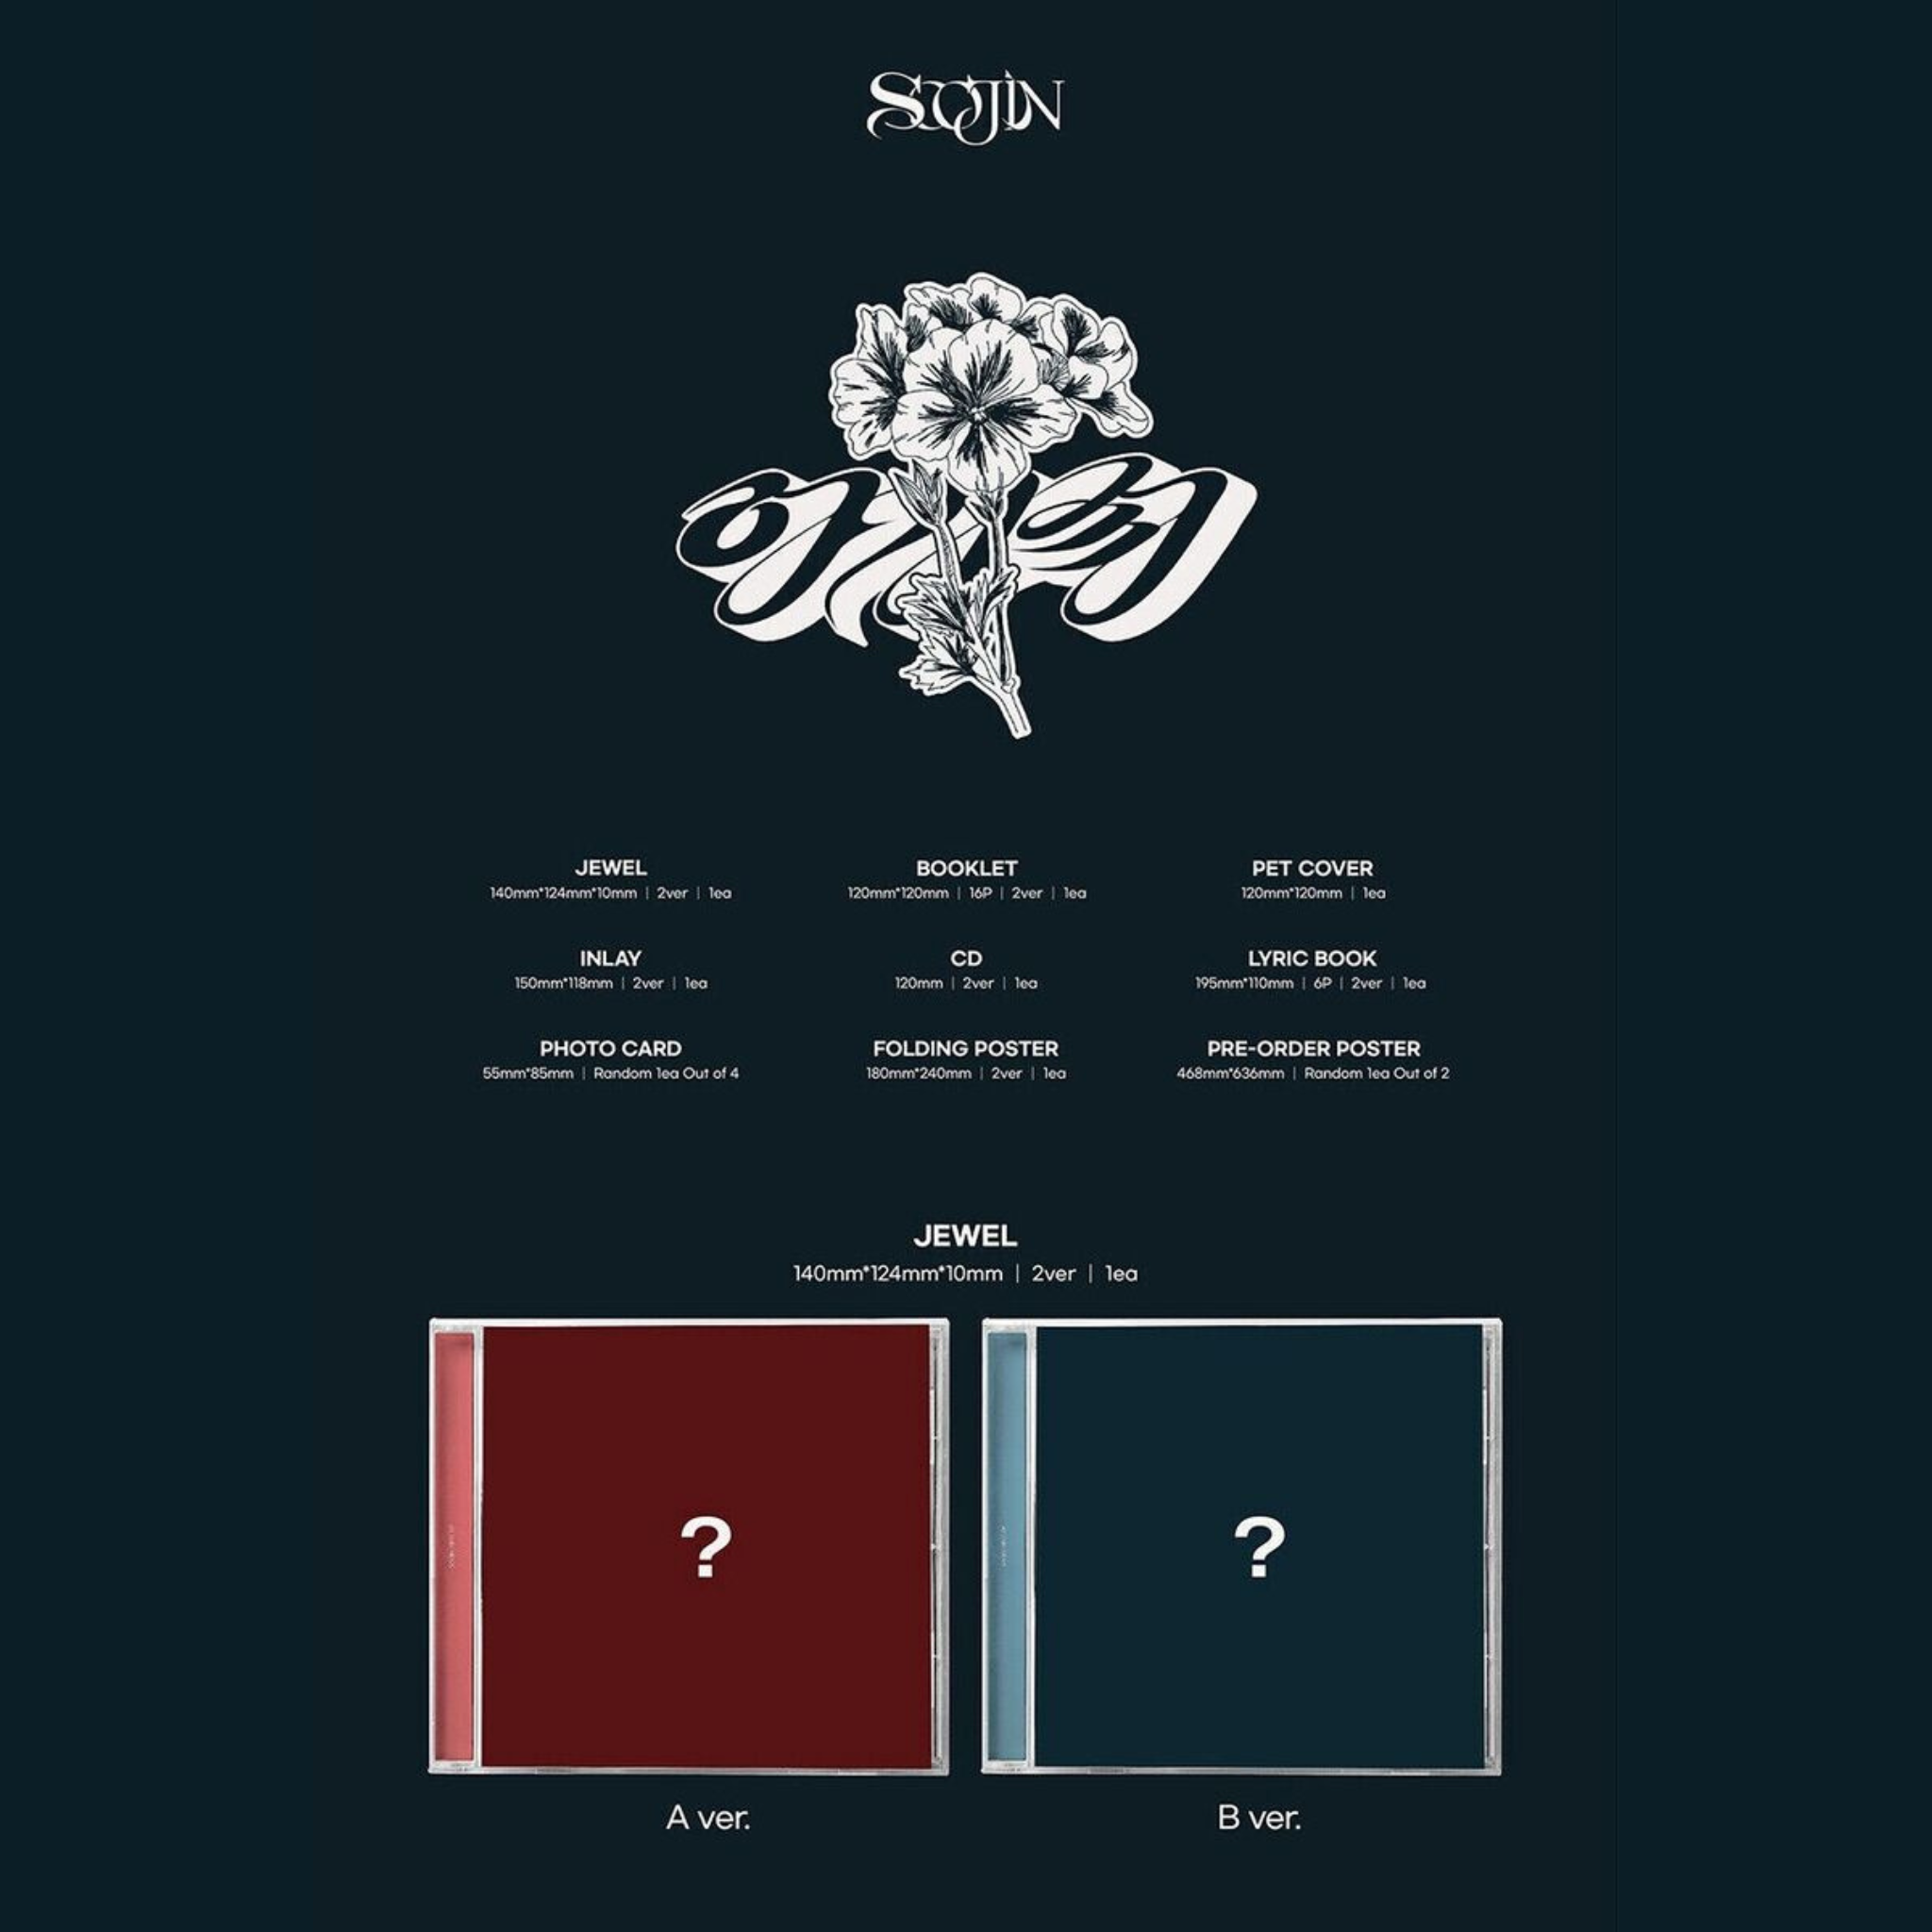 SooJin 1st EP Album "agassy" (Jewel Ver.)